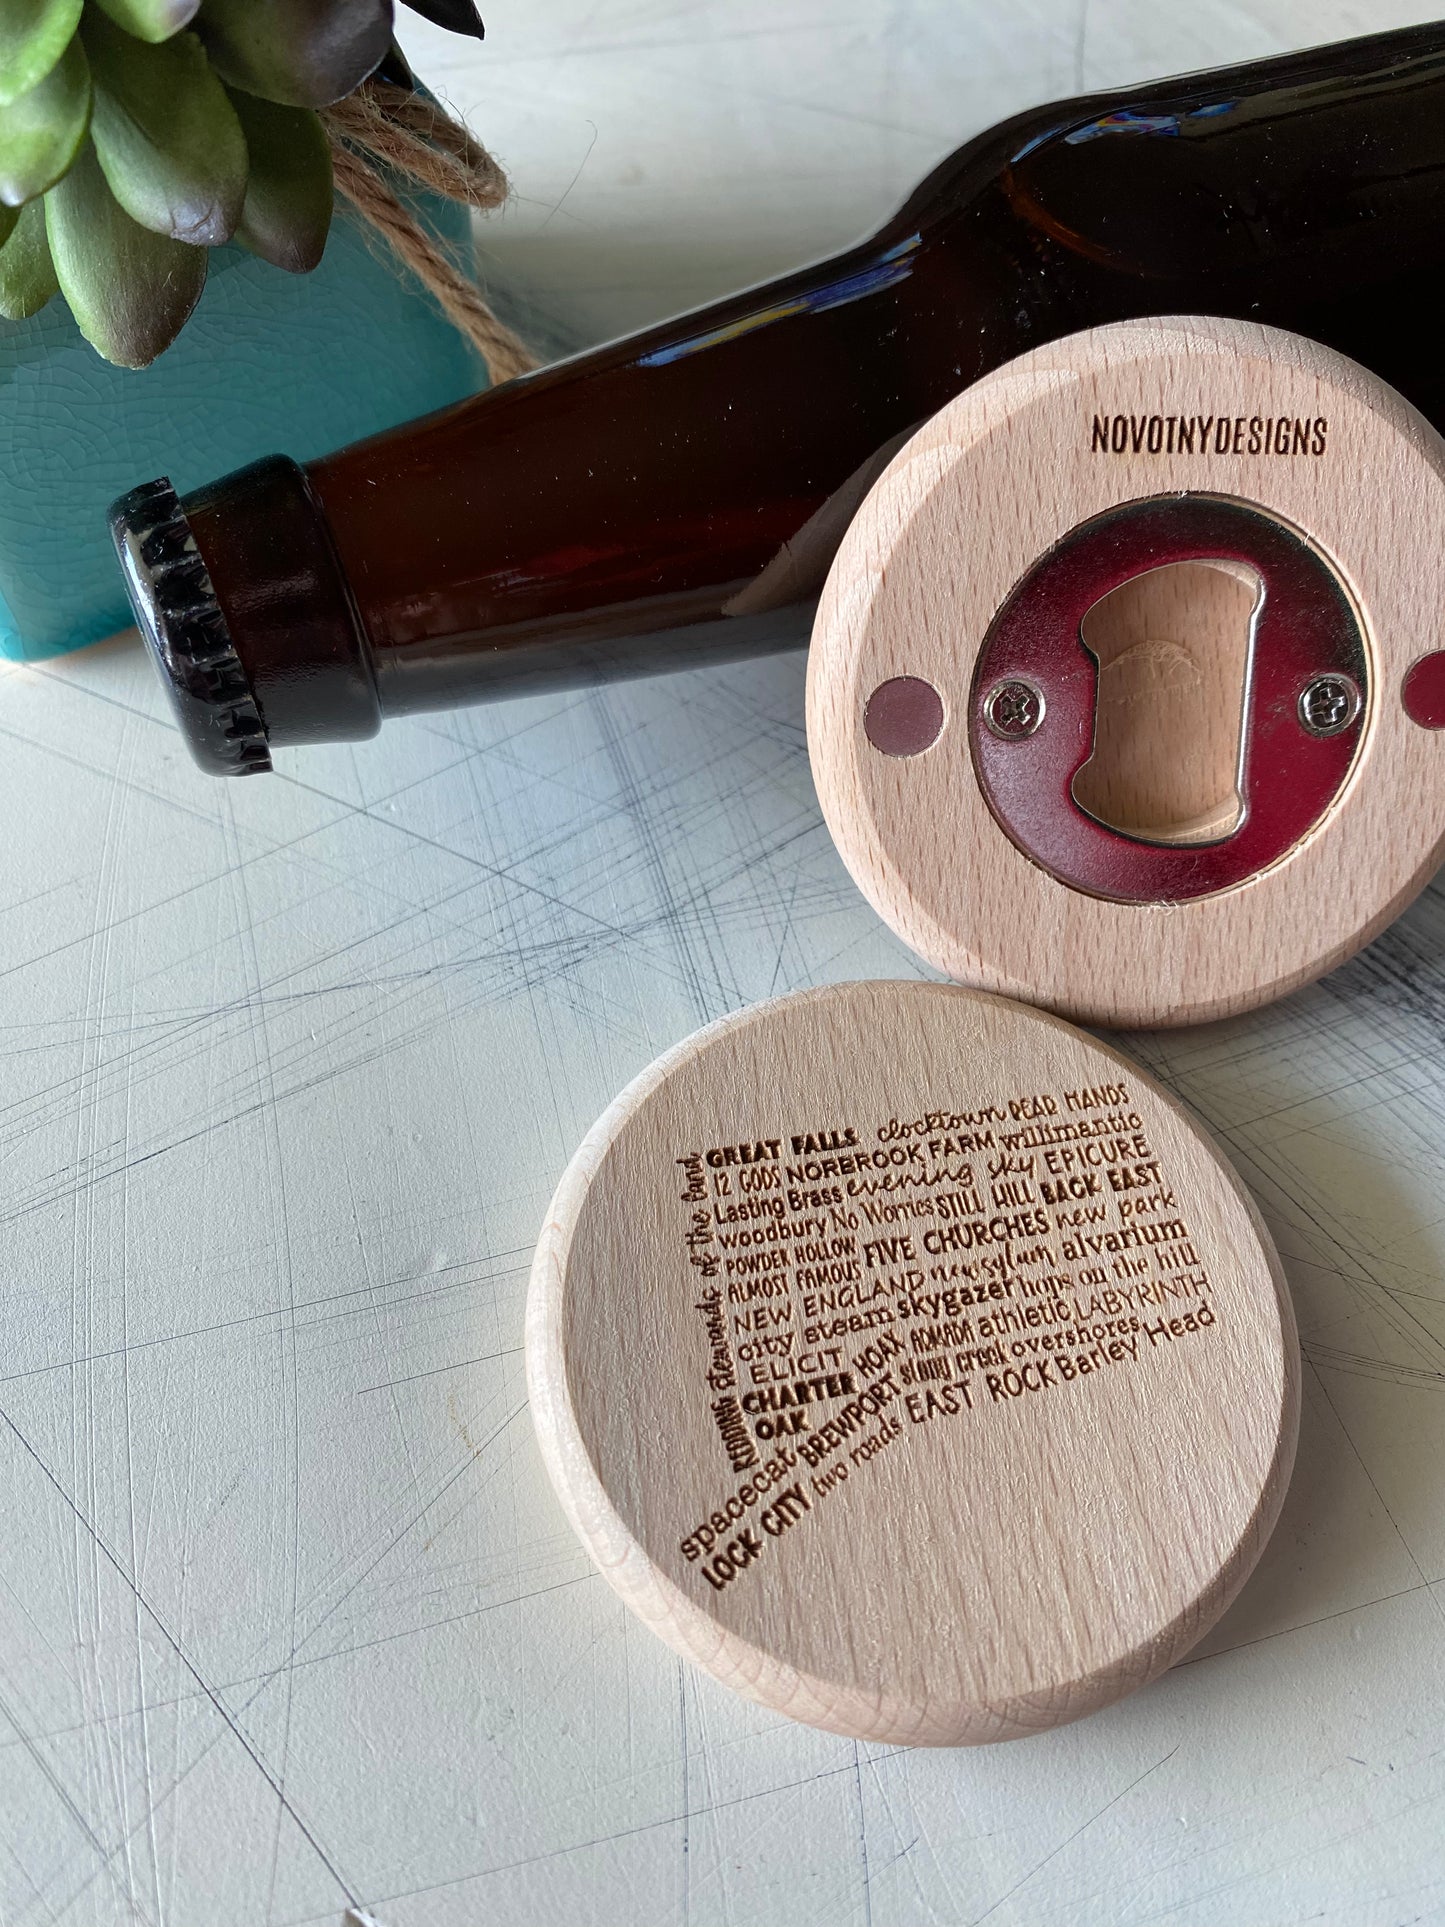 Connecticut Breweries - Novotny Designs - magnetic engraved bottle opener